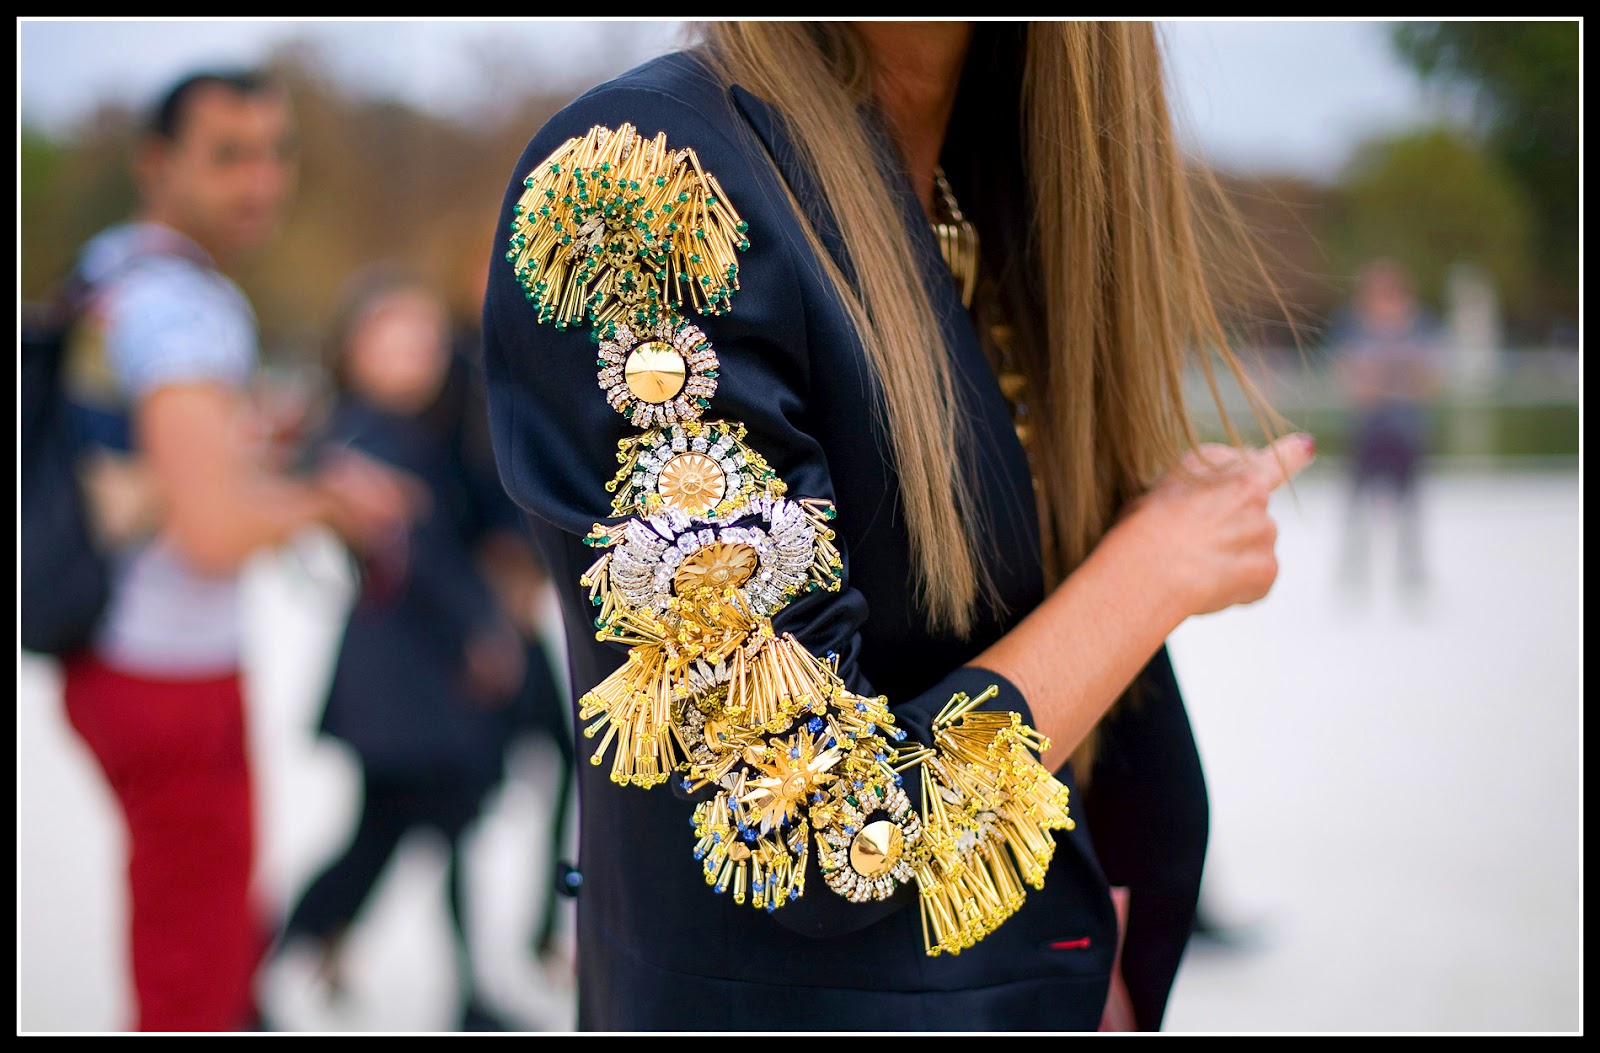 http://4.bp.blogspot.com/-mXNIscXGlSM/T4woSckM89I/AAAAAAAABzo/JevBKCNGYJs/s1600/paris-street-fashion-embellished+blazer.jpg